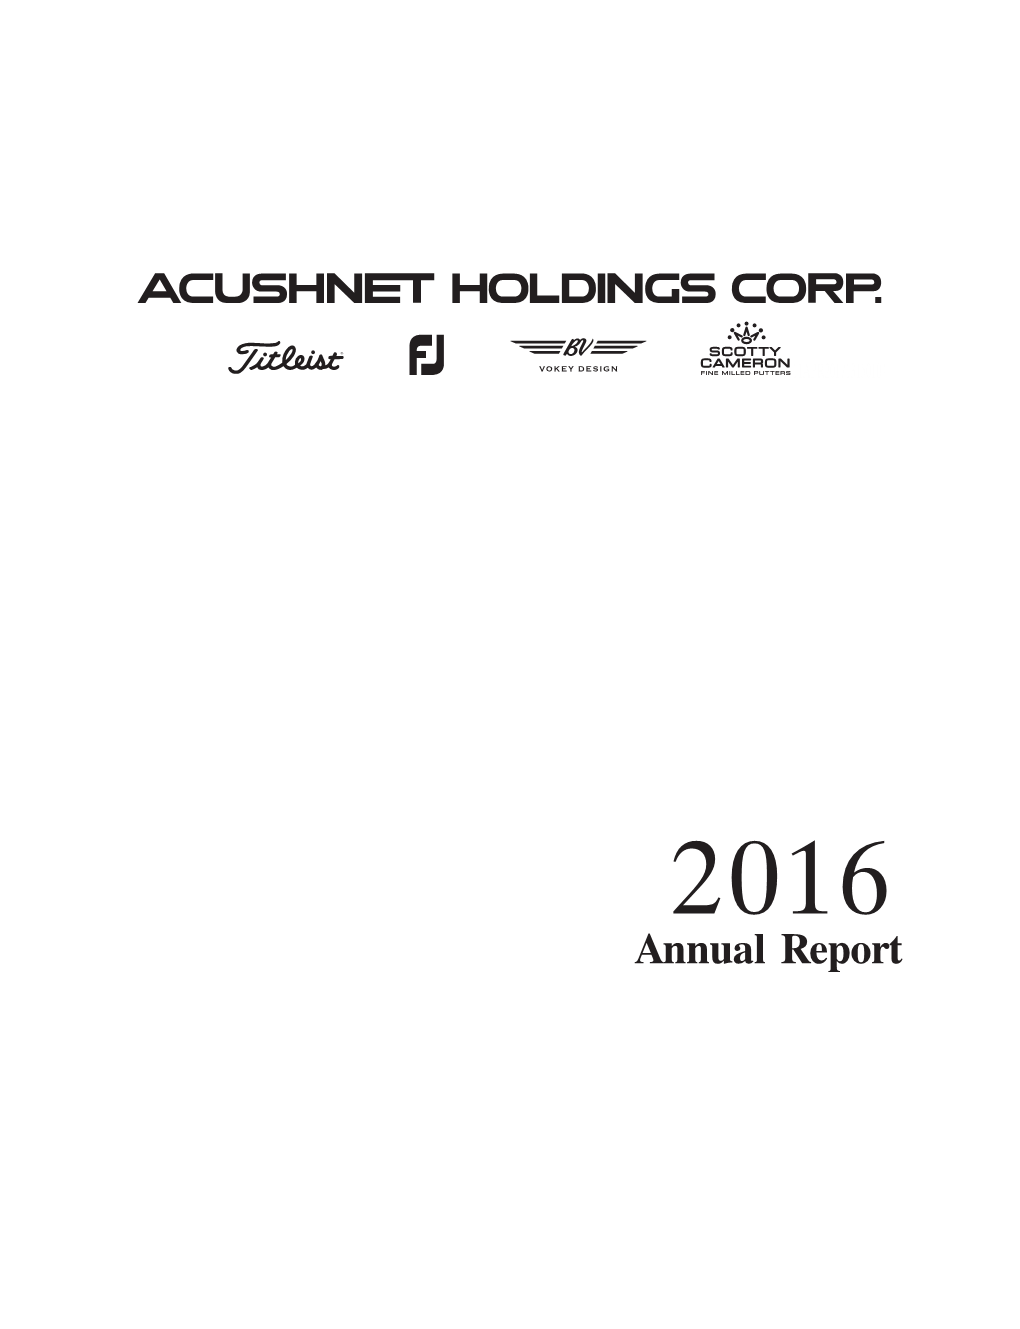 Acushnet Holdings Annual Report 2016